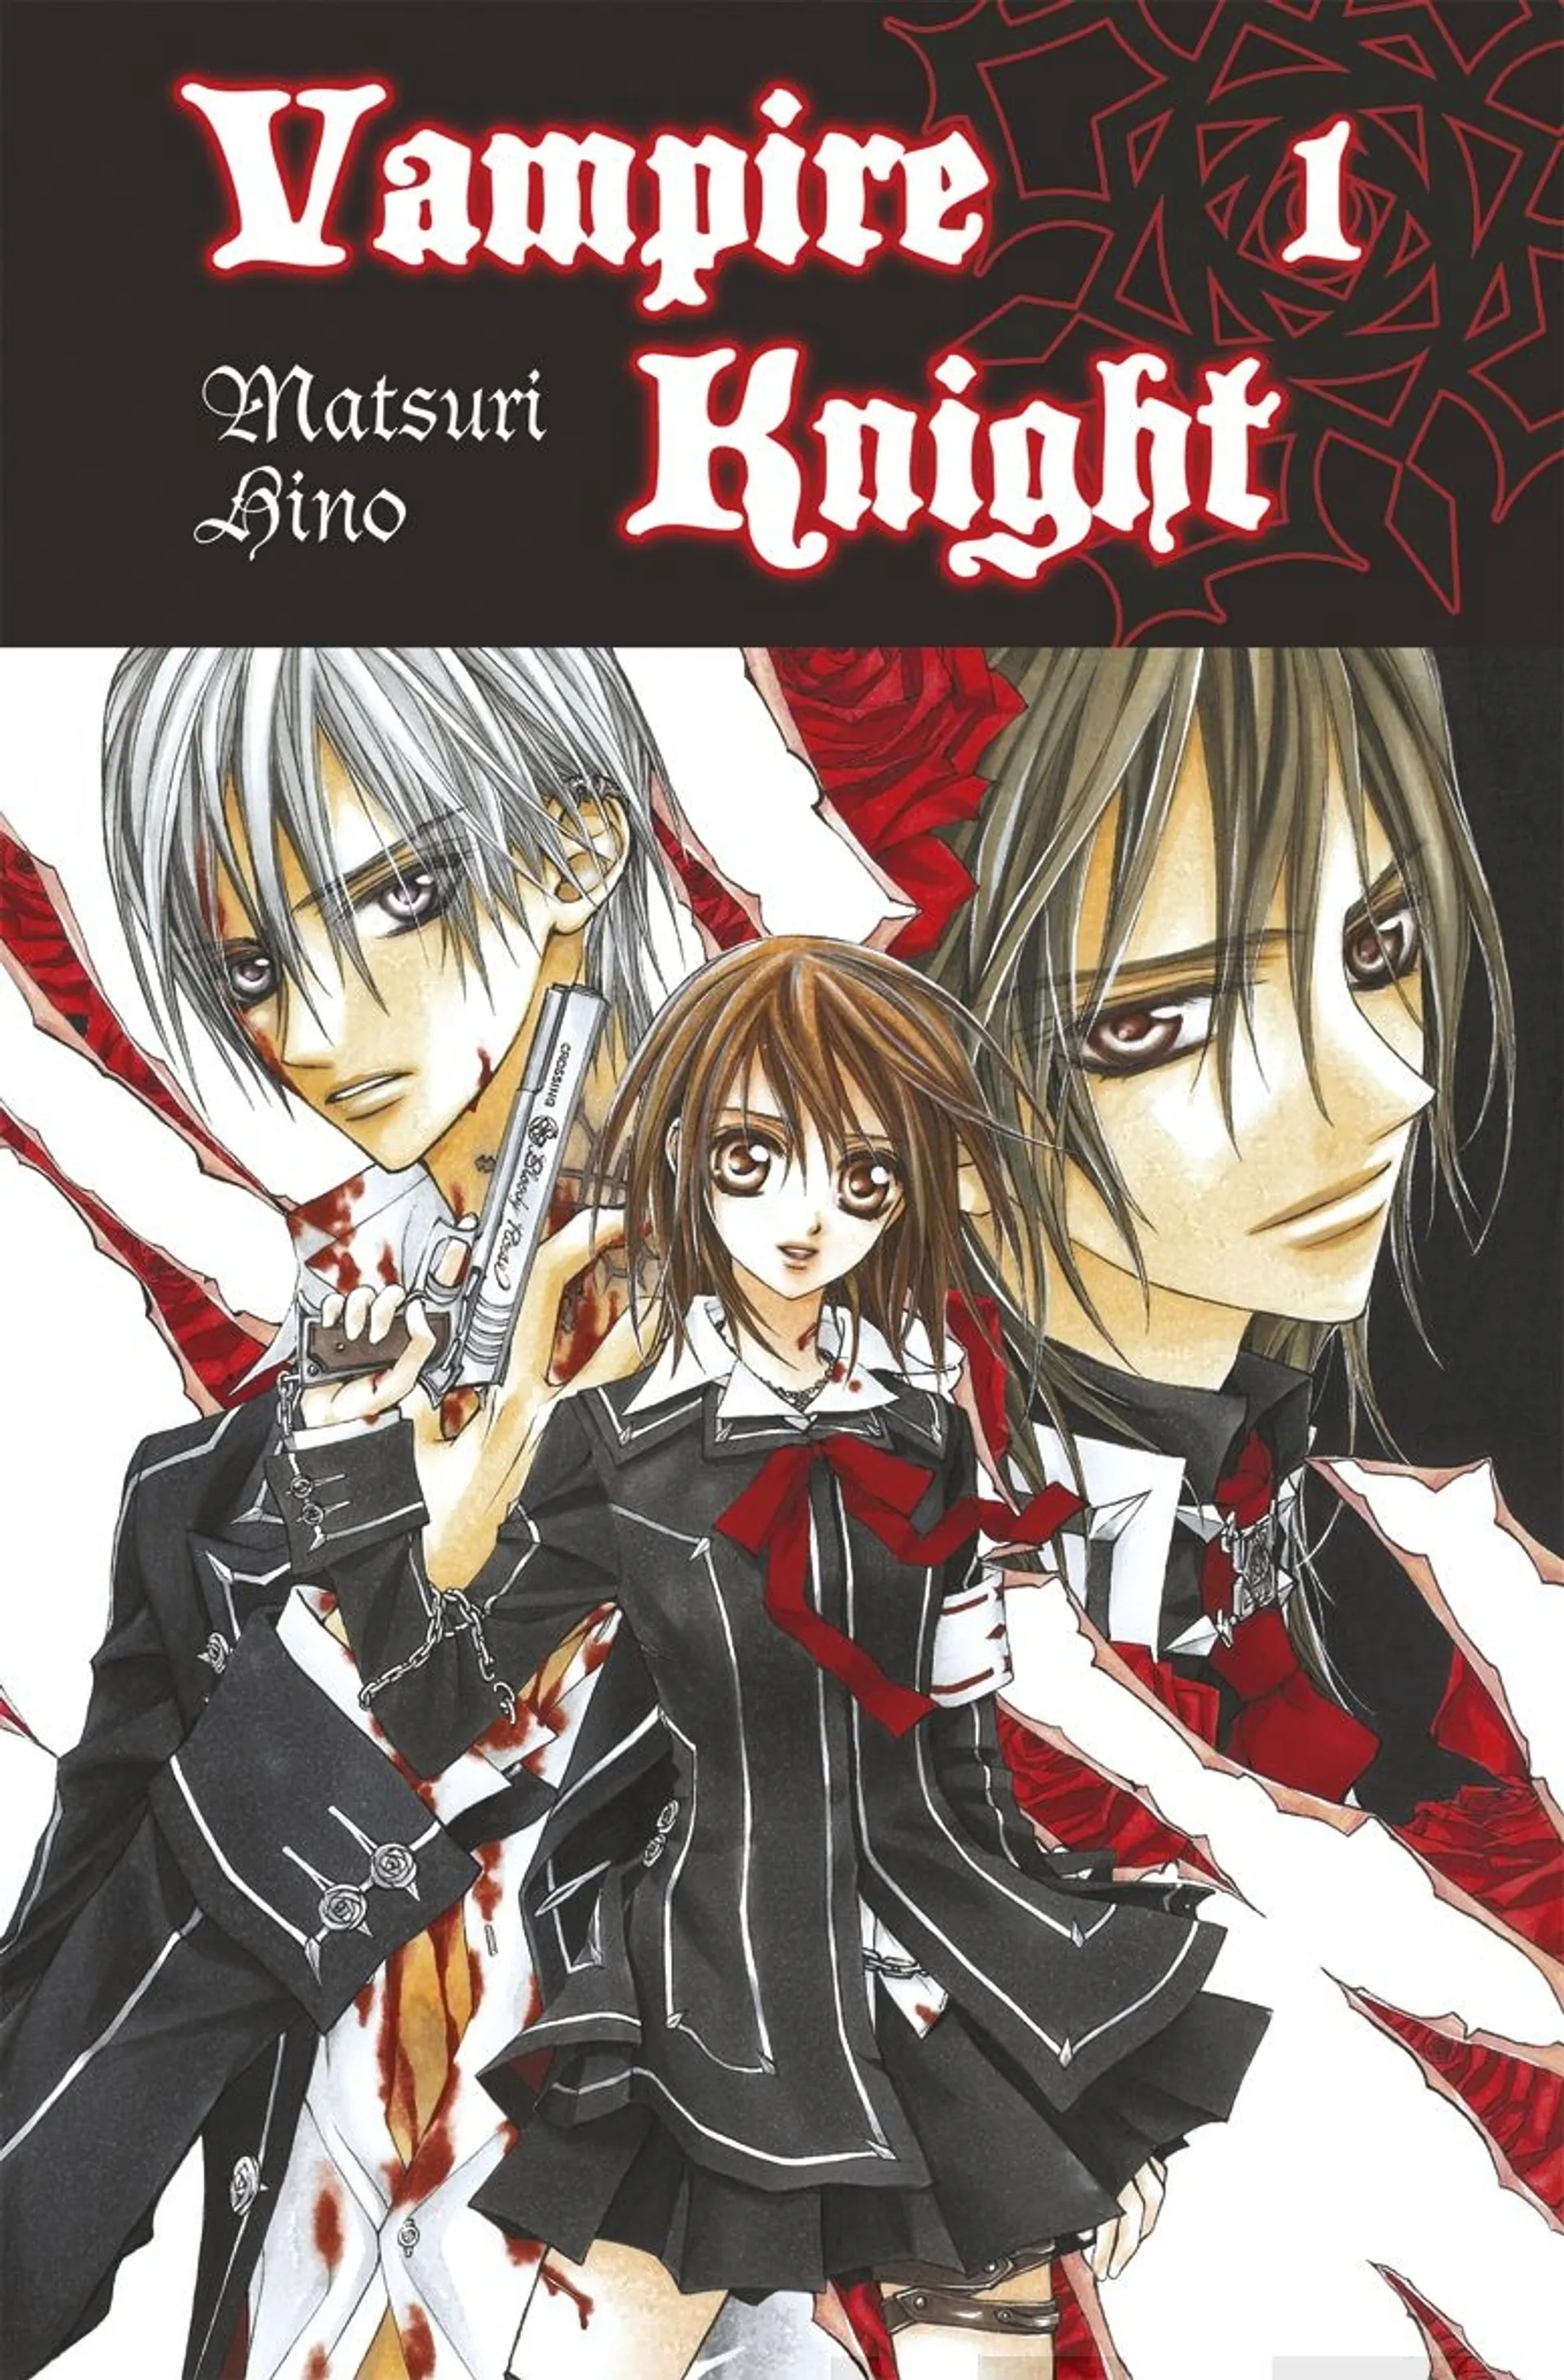 Hino, Vampire Knight  1